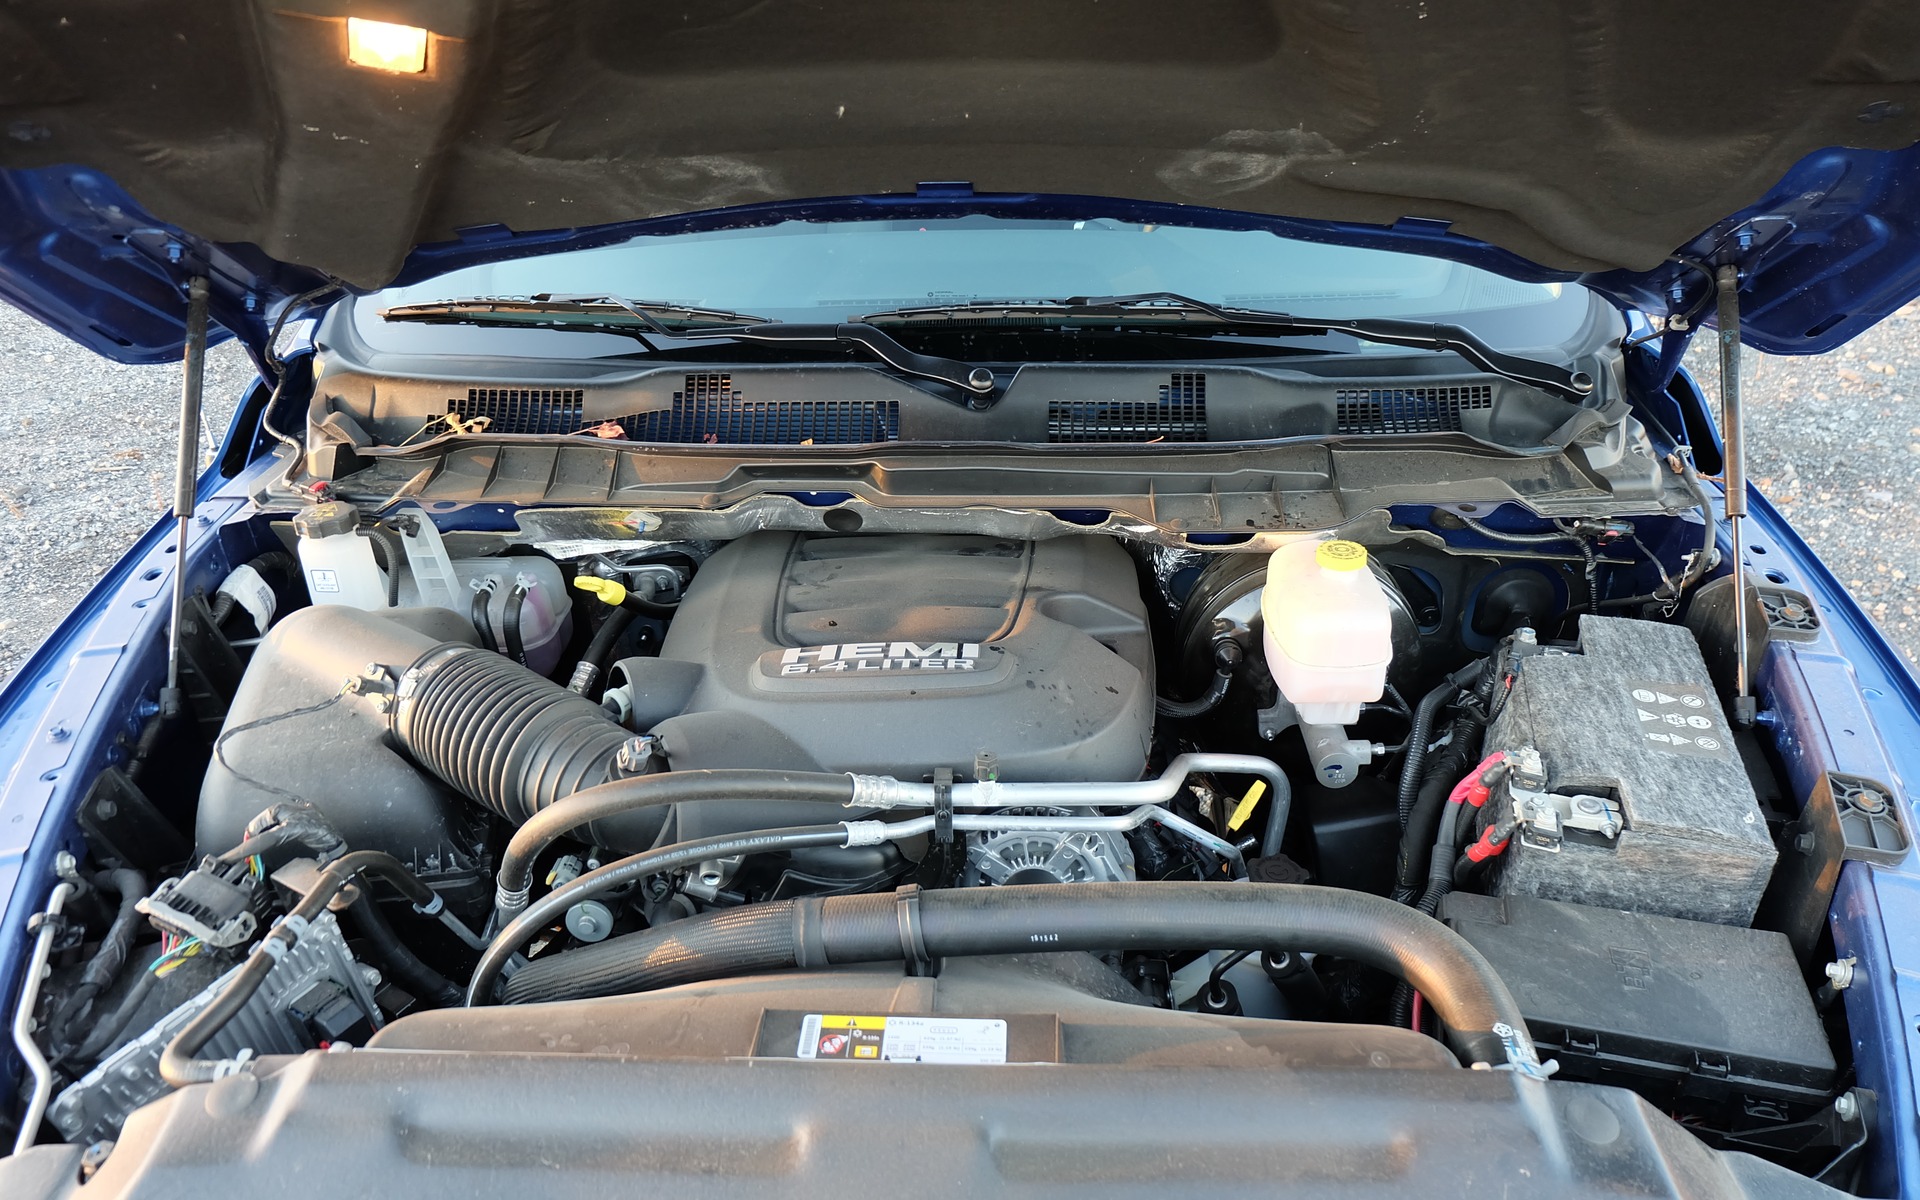 The 6.4-litre Hemi V8 comes standard.